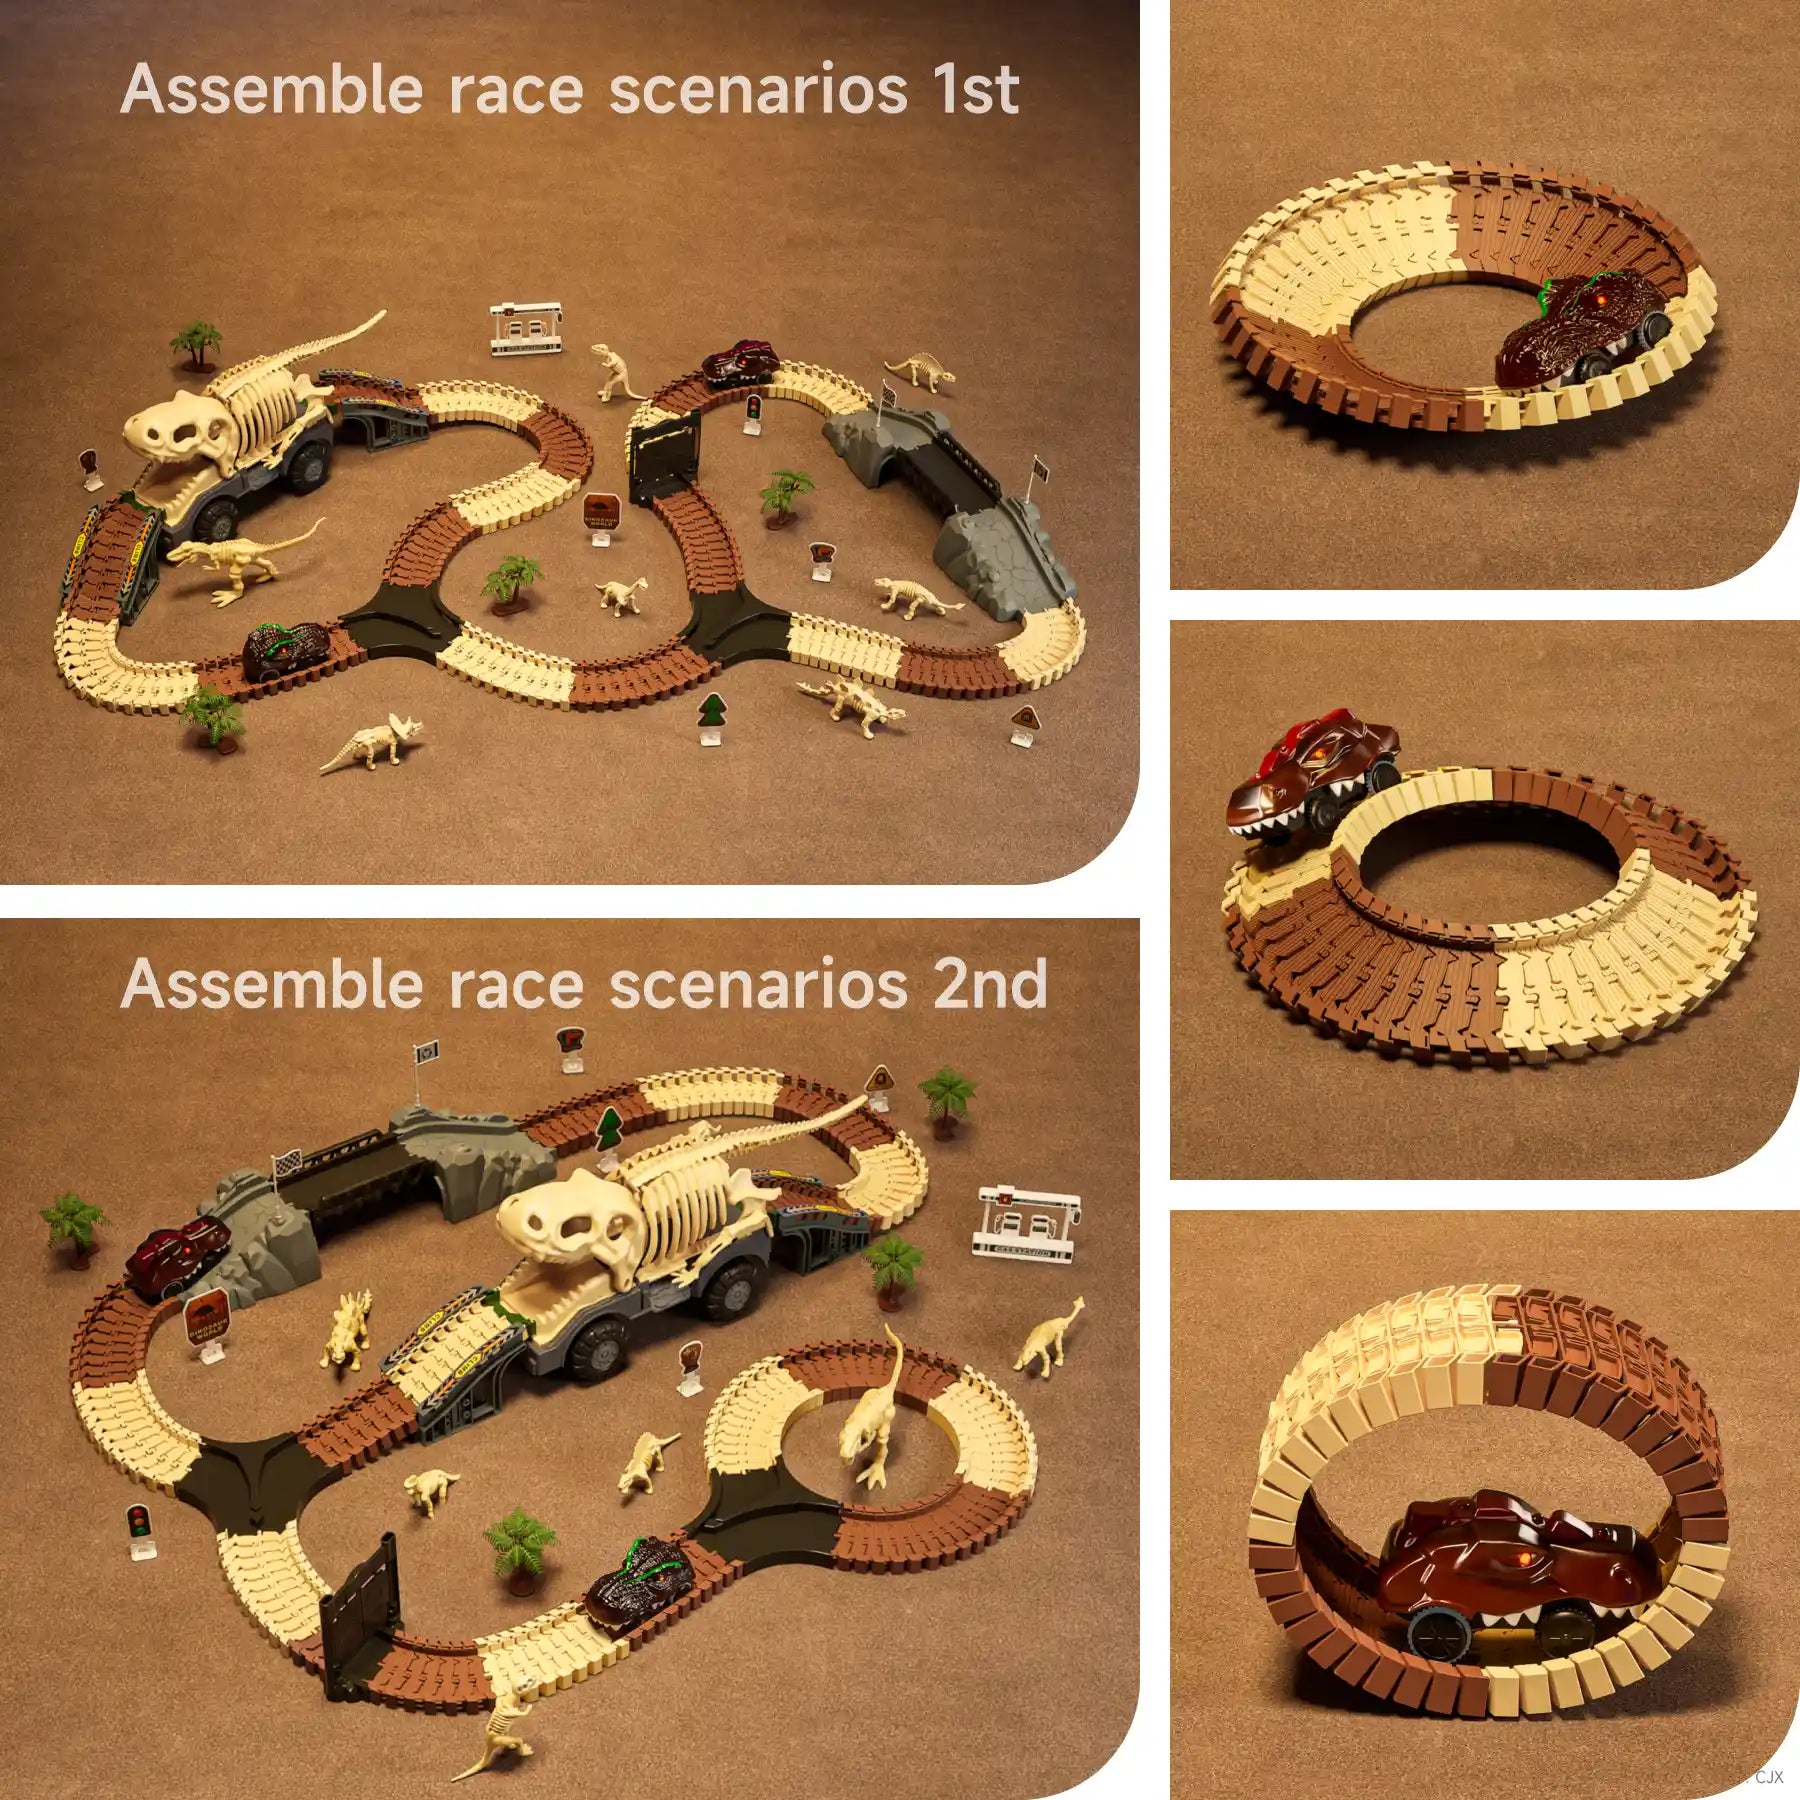 diverse race scenarios for dinosaur race track toy